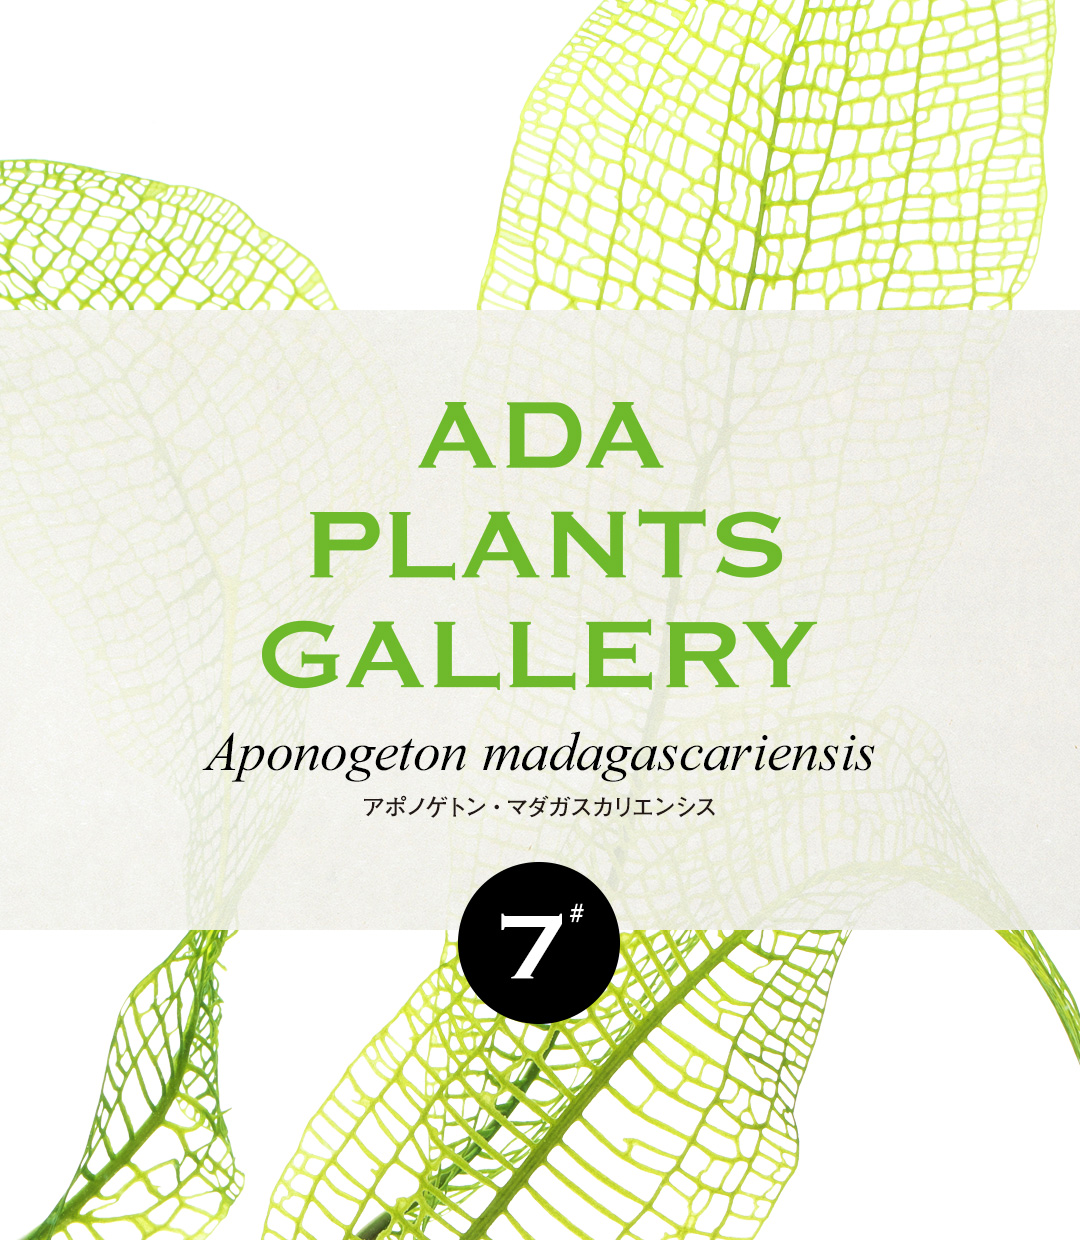 ADA PLANTS GALLERY #07 Aponogeton madagascariensis